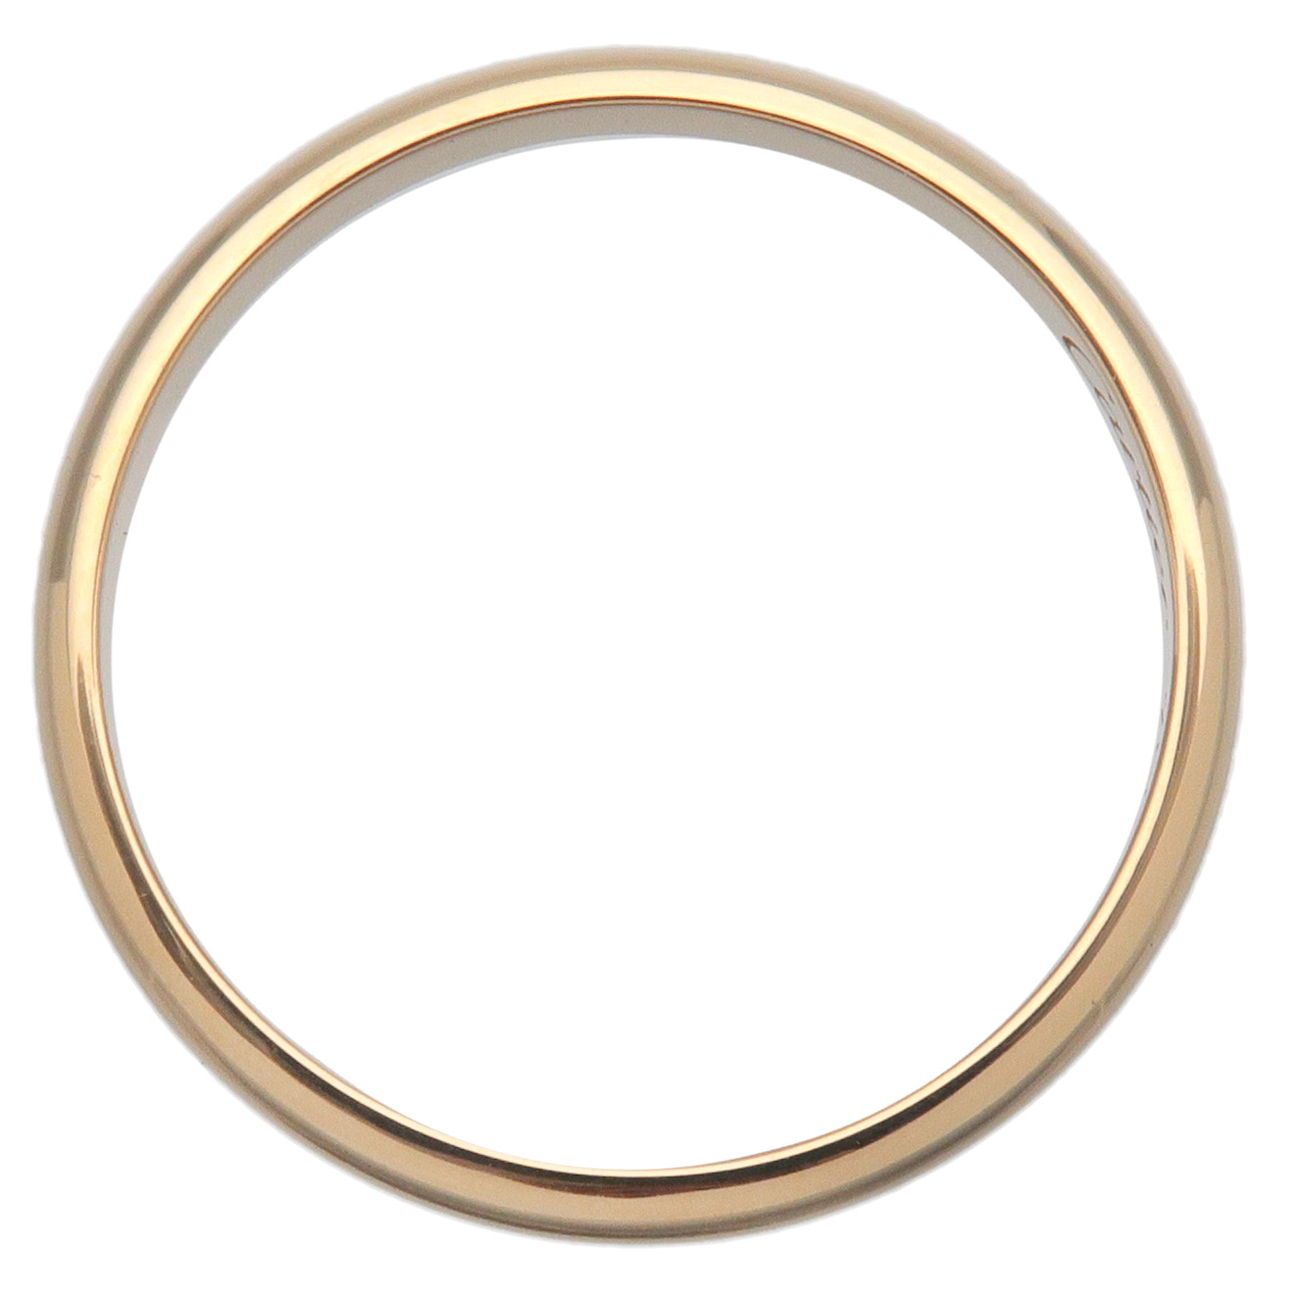 Cartier Wedding Ring K18YG 750YG Yellow Gold #55 US7-7.5 EU55